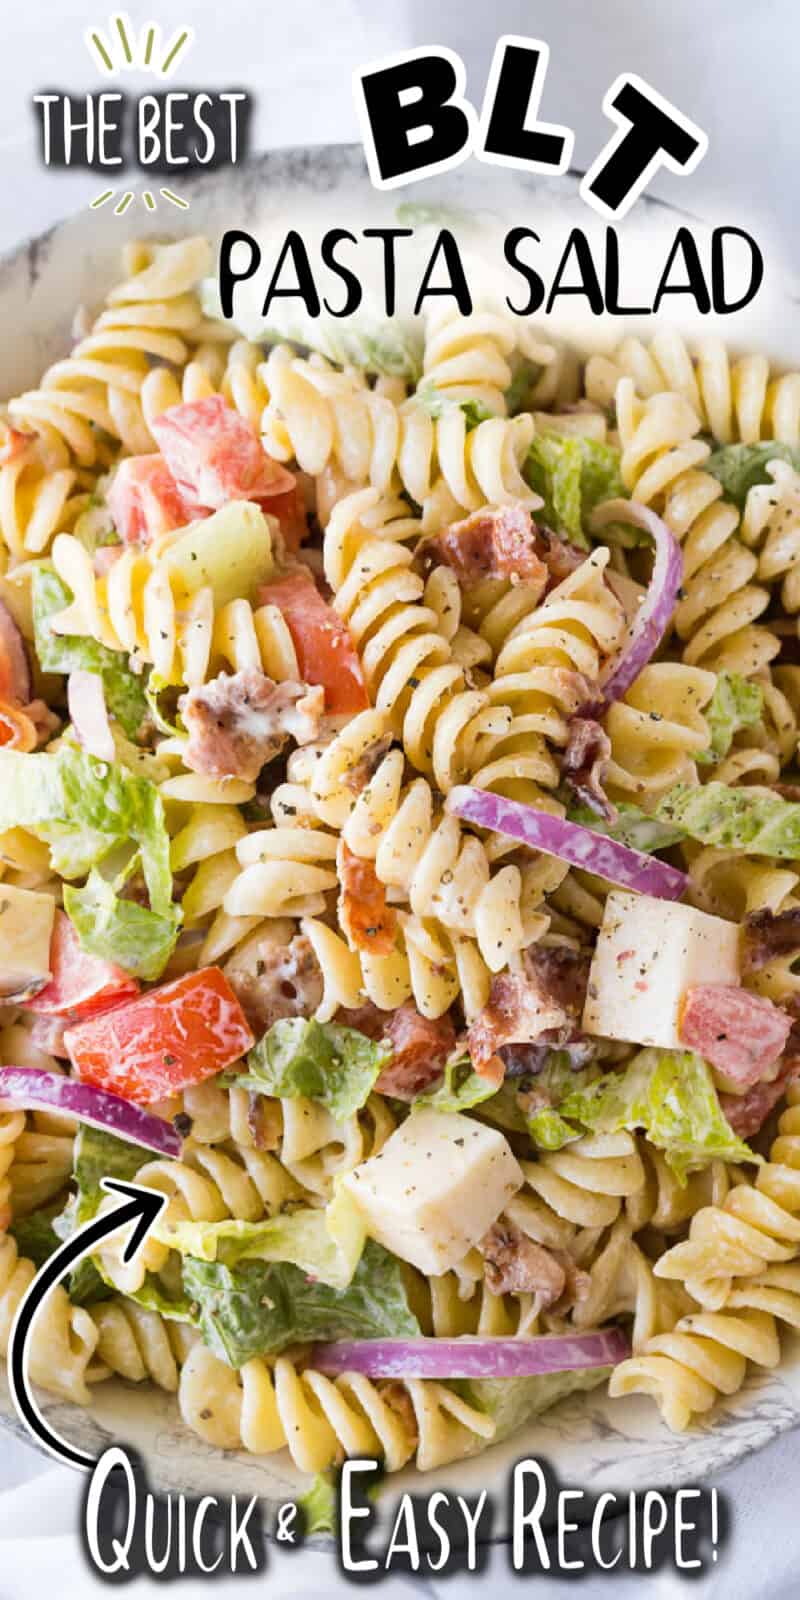 blt pasta salad with text